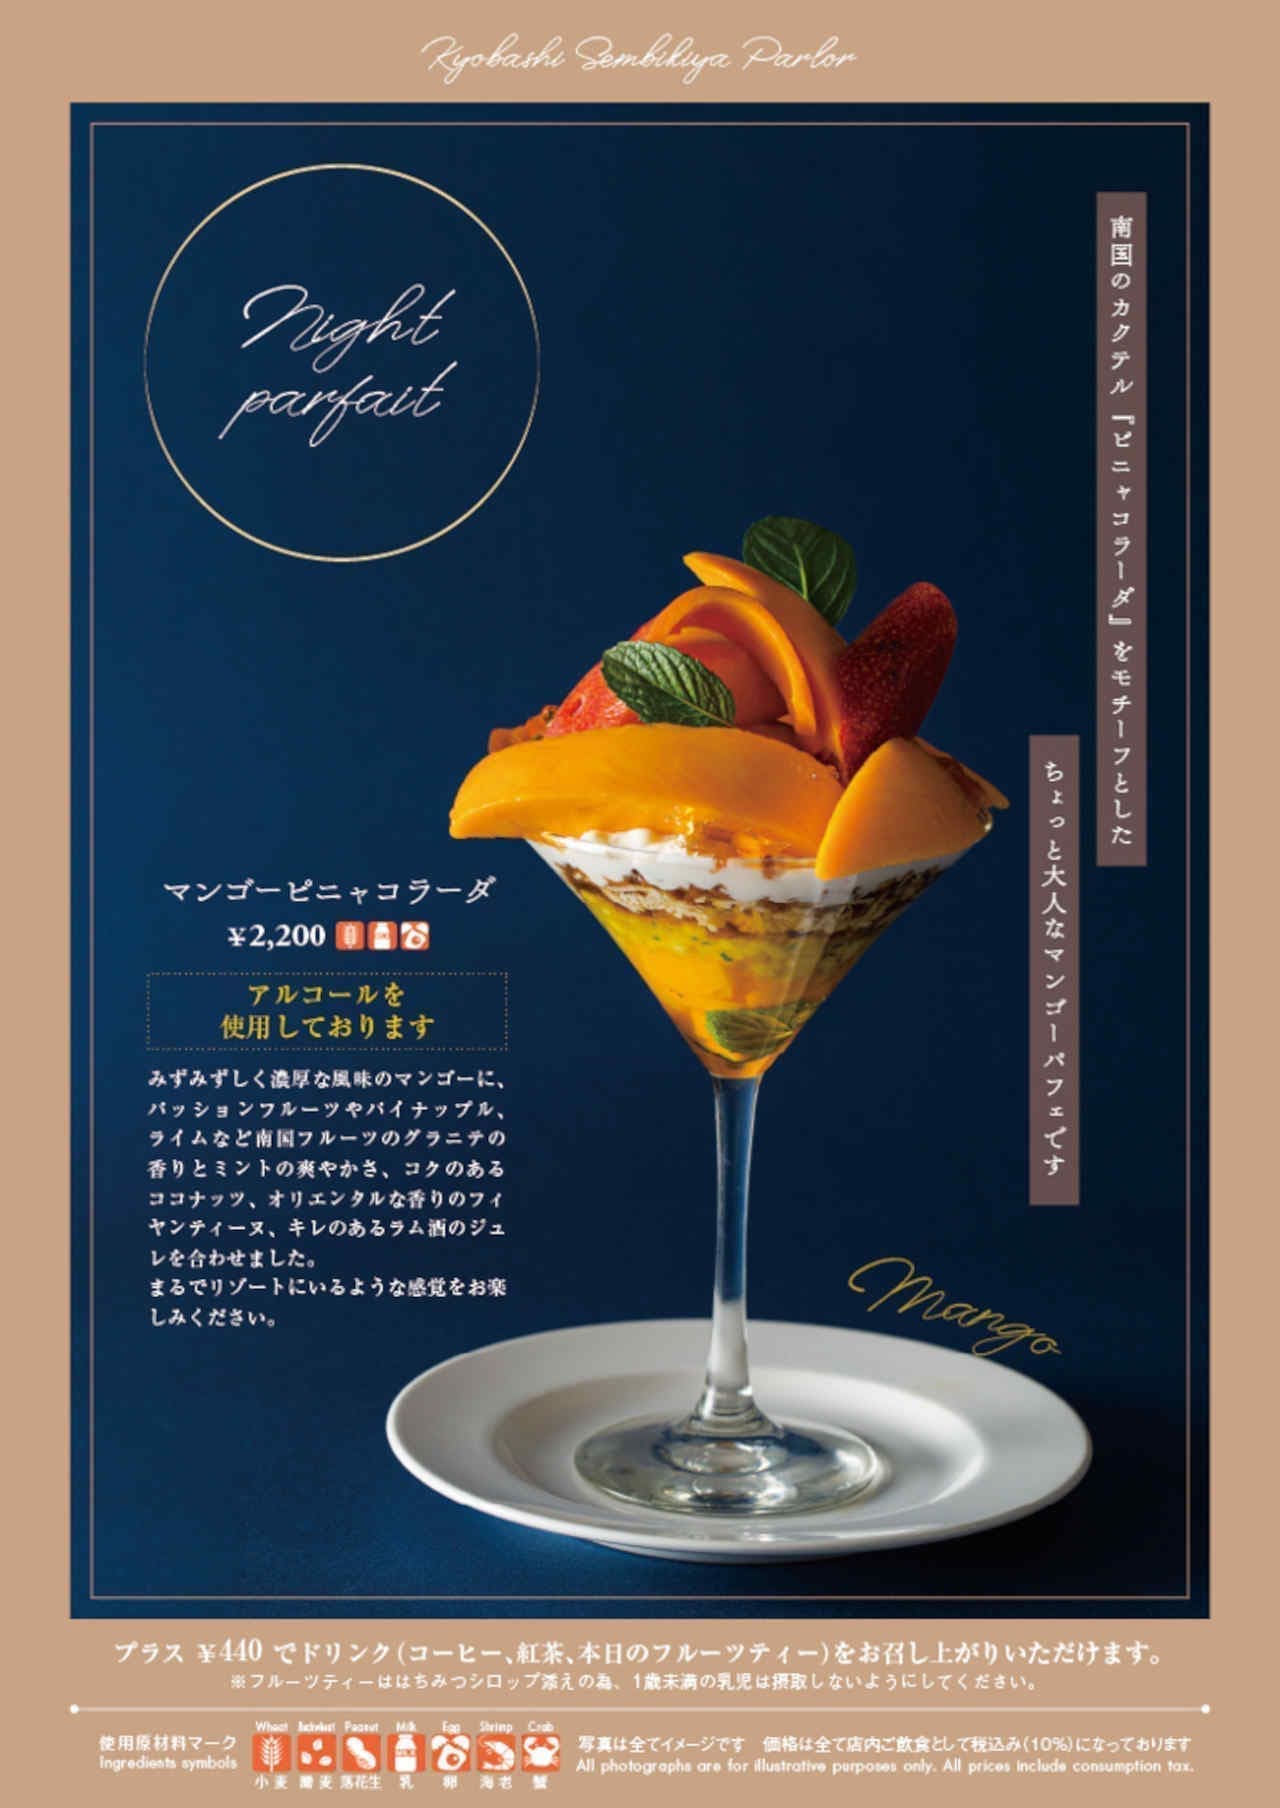 Kyobashi Senbiya "Night Limited Parfait" is now available! "Banane Amer" "Mango Pina Colada"